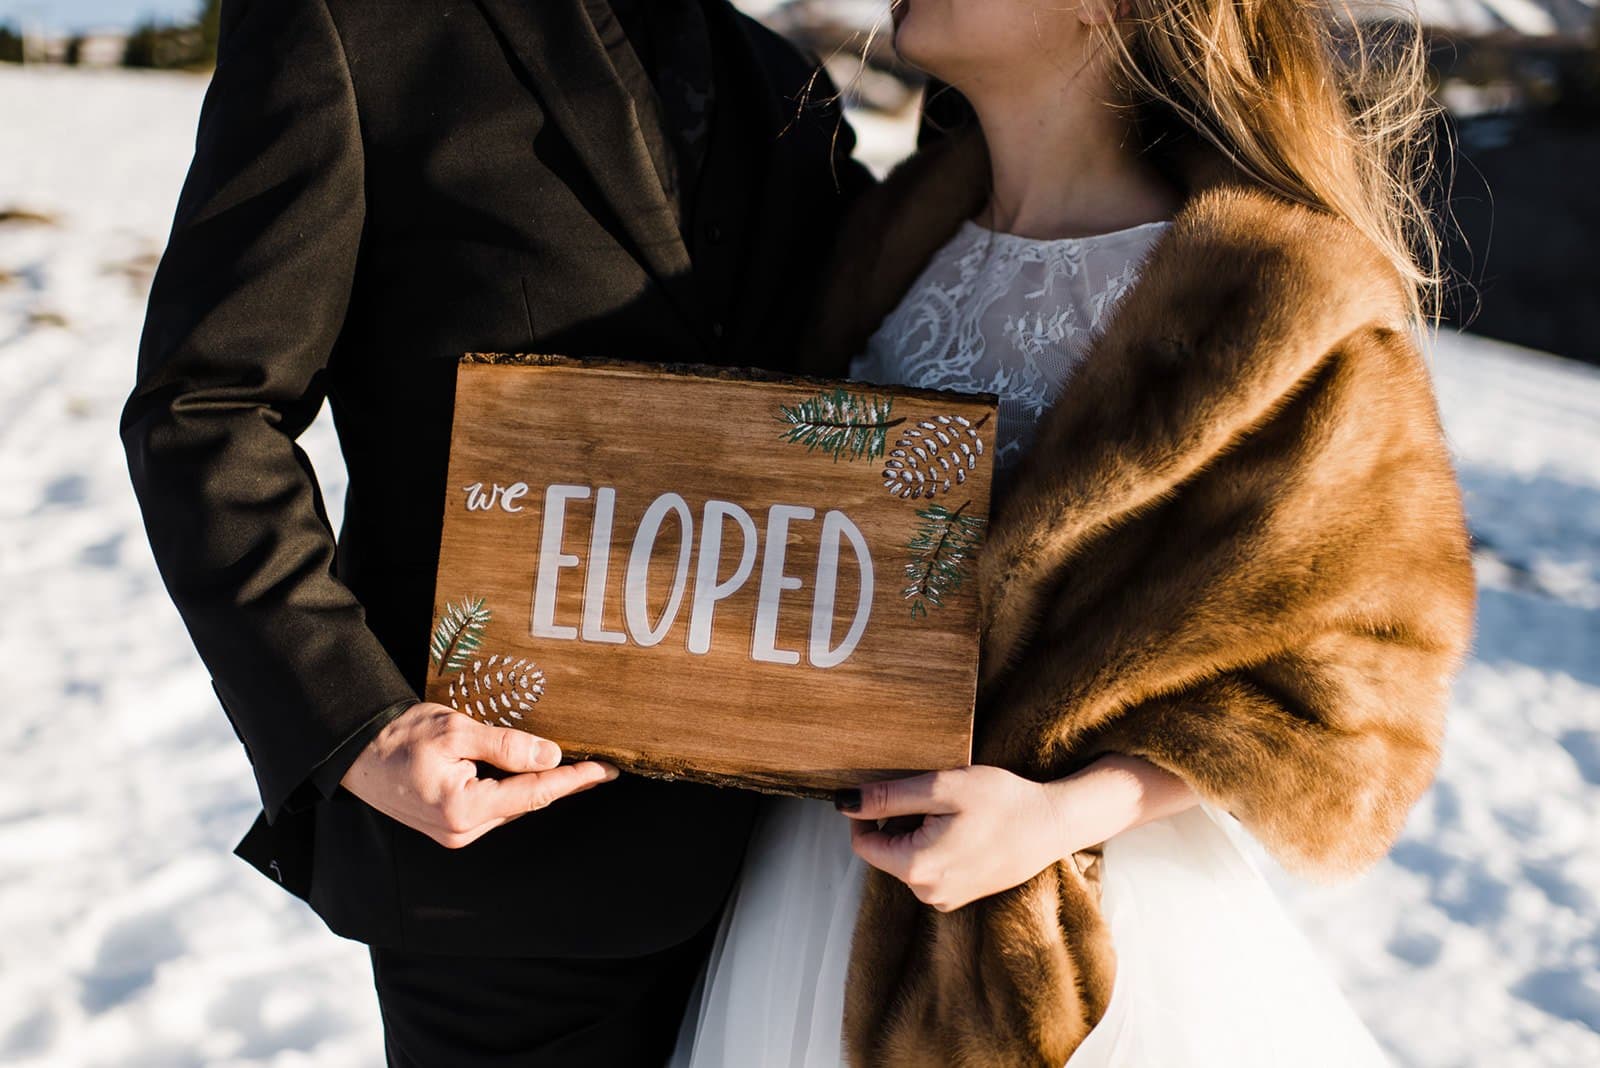 eloped announcement sign